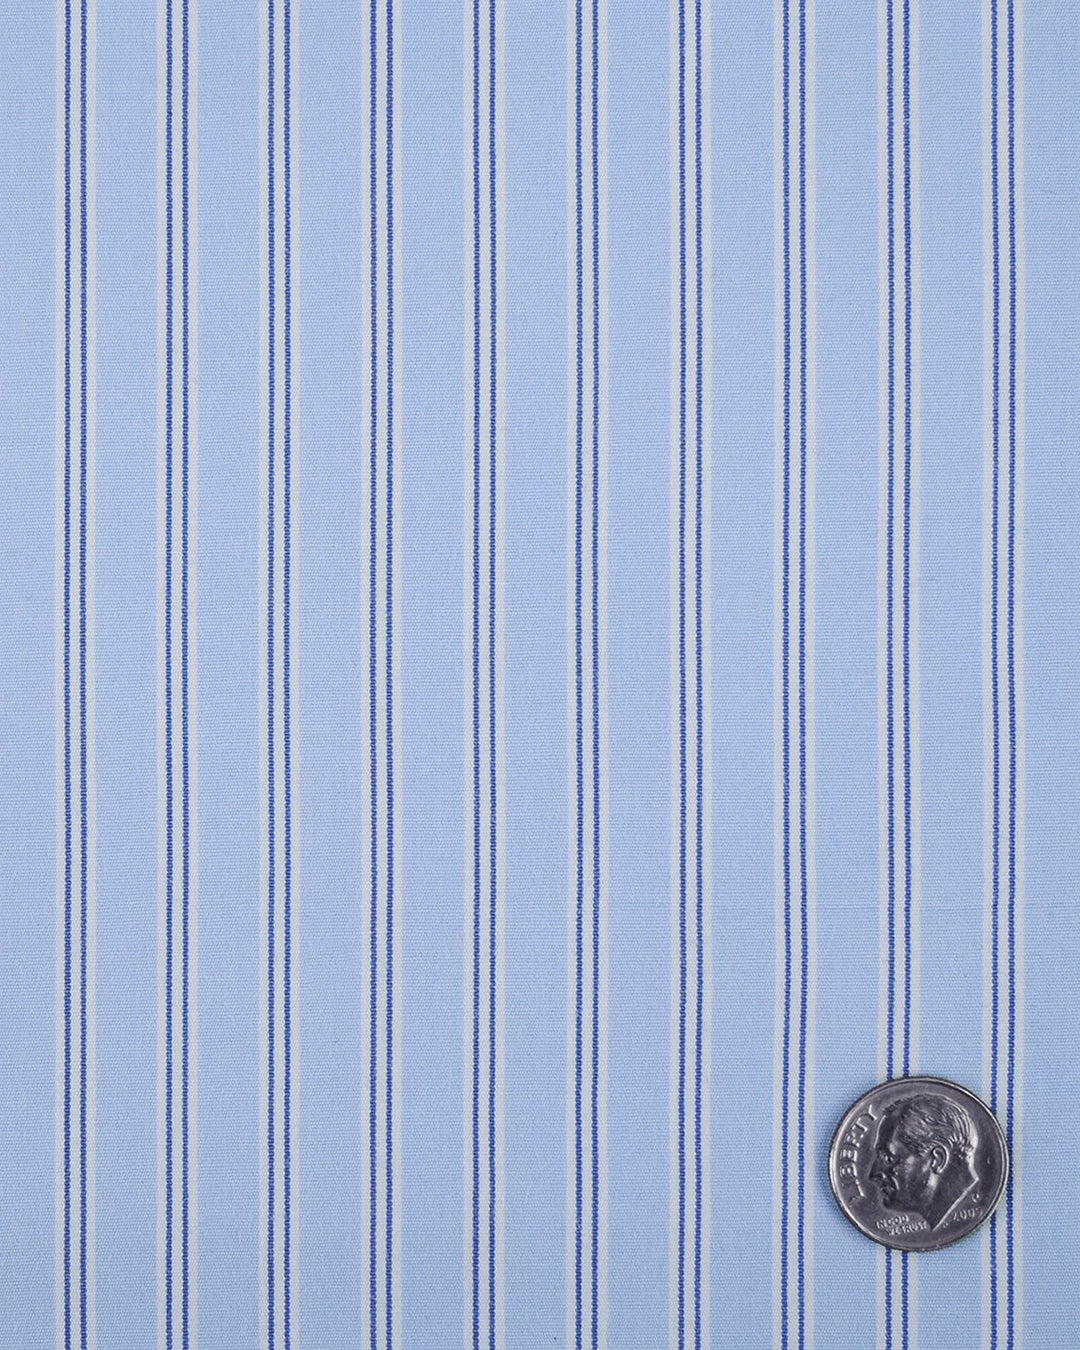 Blue Navy Alternate Stripes